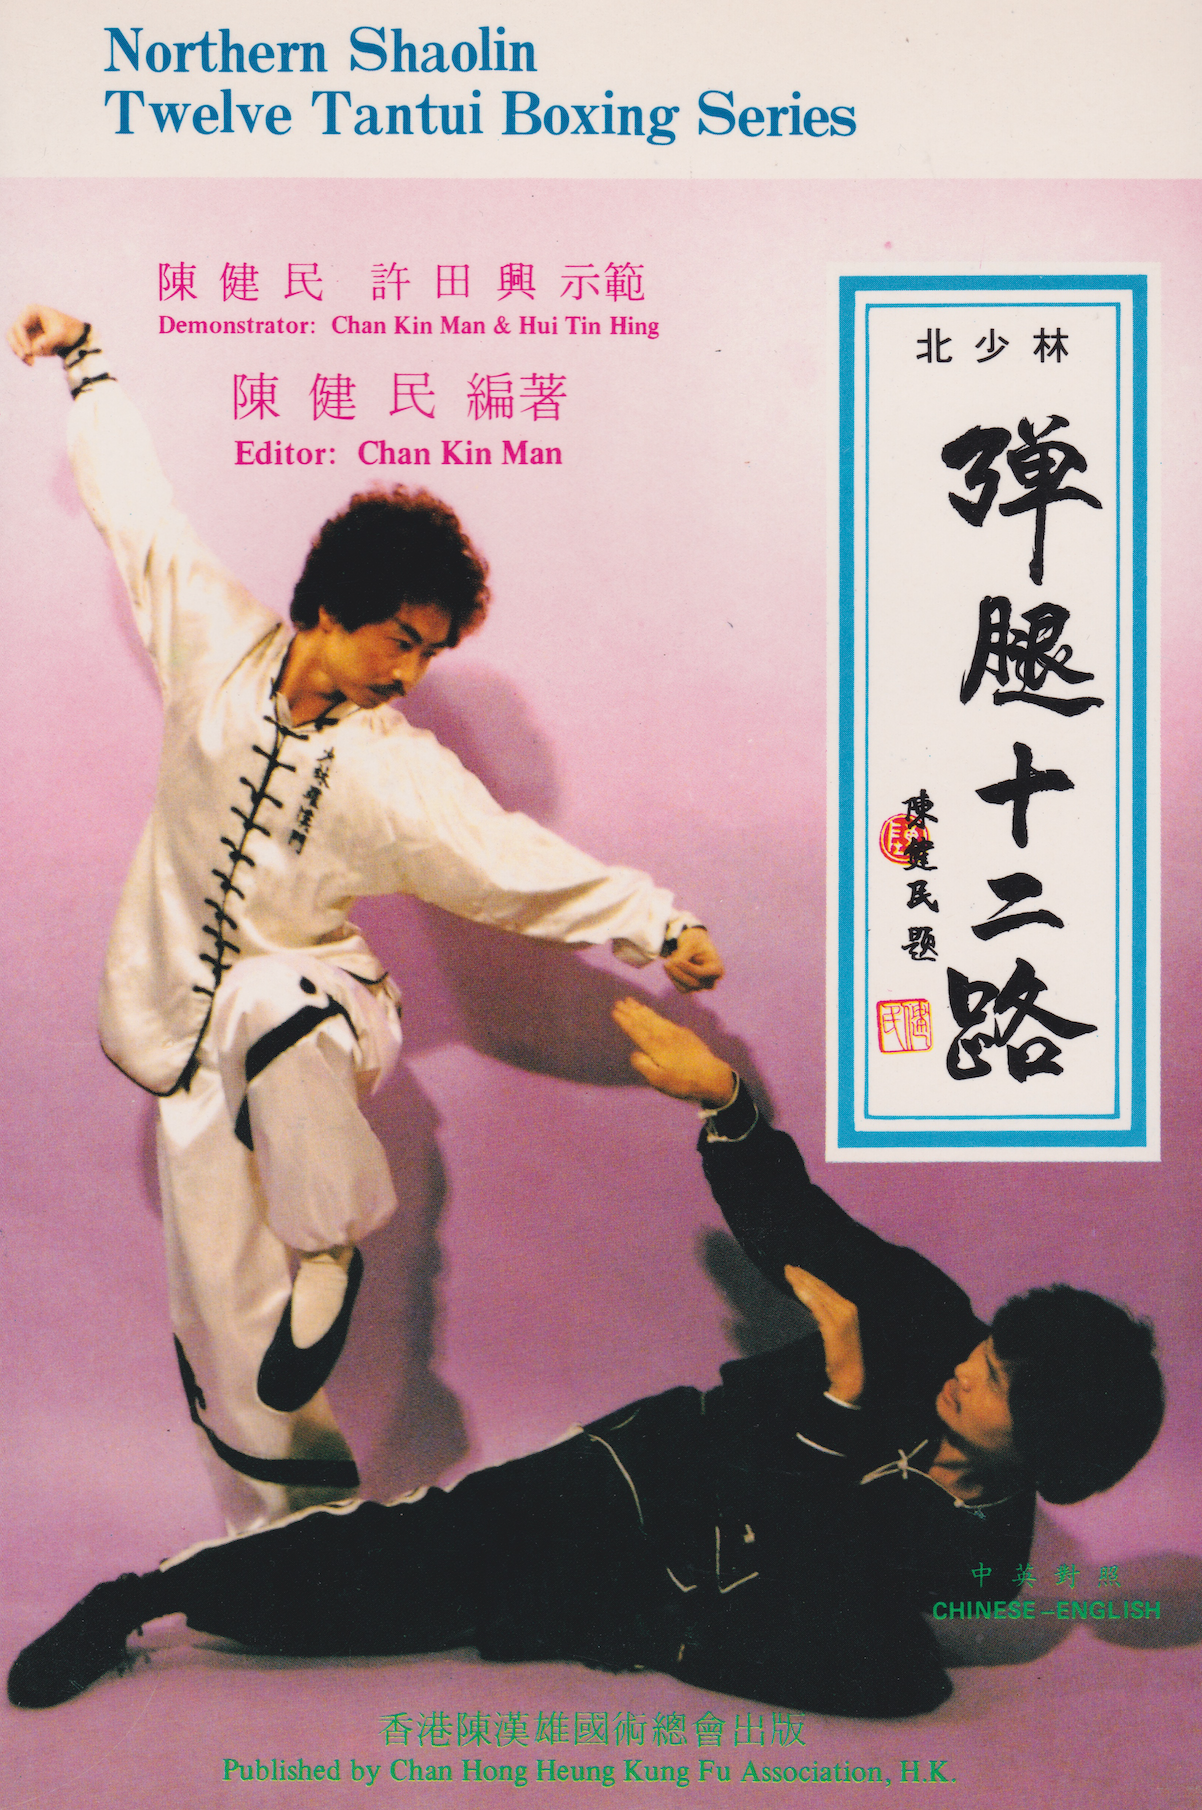 Northern Shaolin Twelve Tantui Boxing Series Book by Shan Kin Man